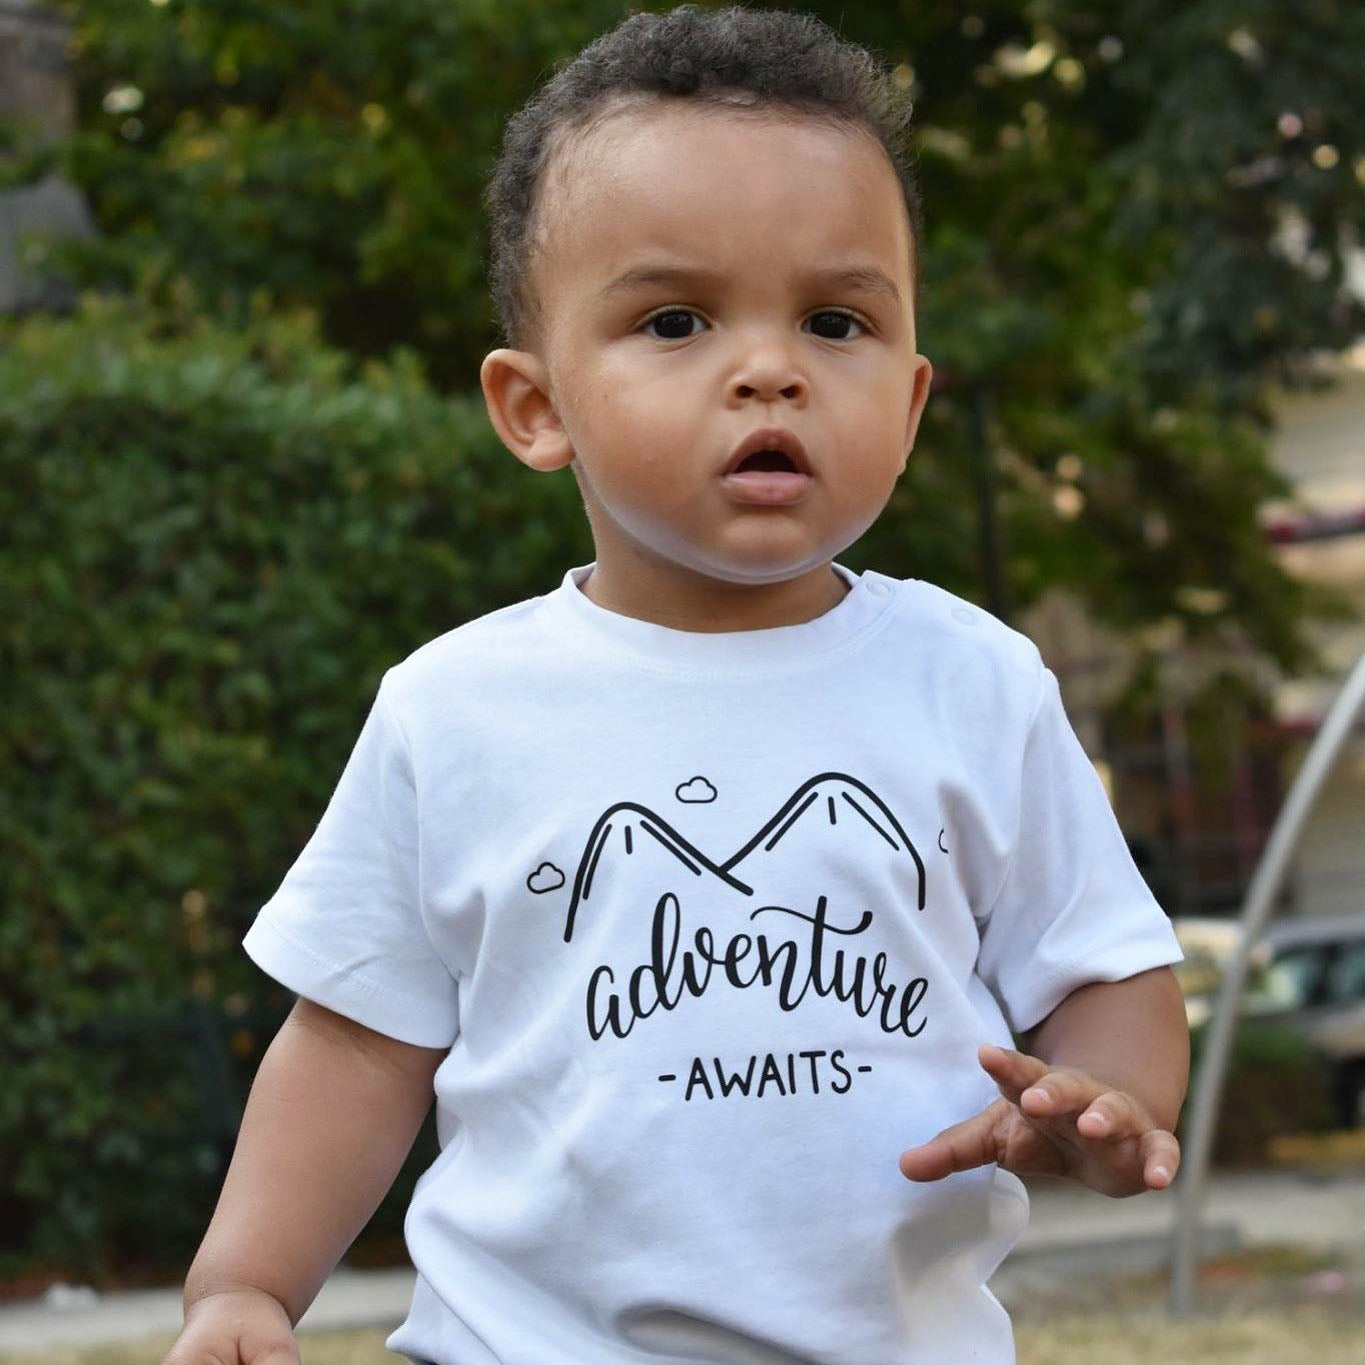 'Adventure awaits' baby shortsleeve shirt